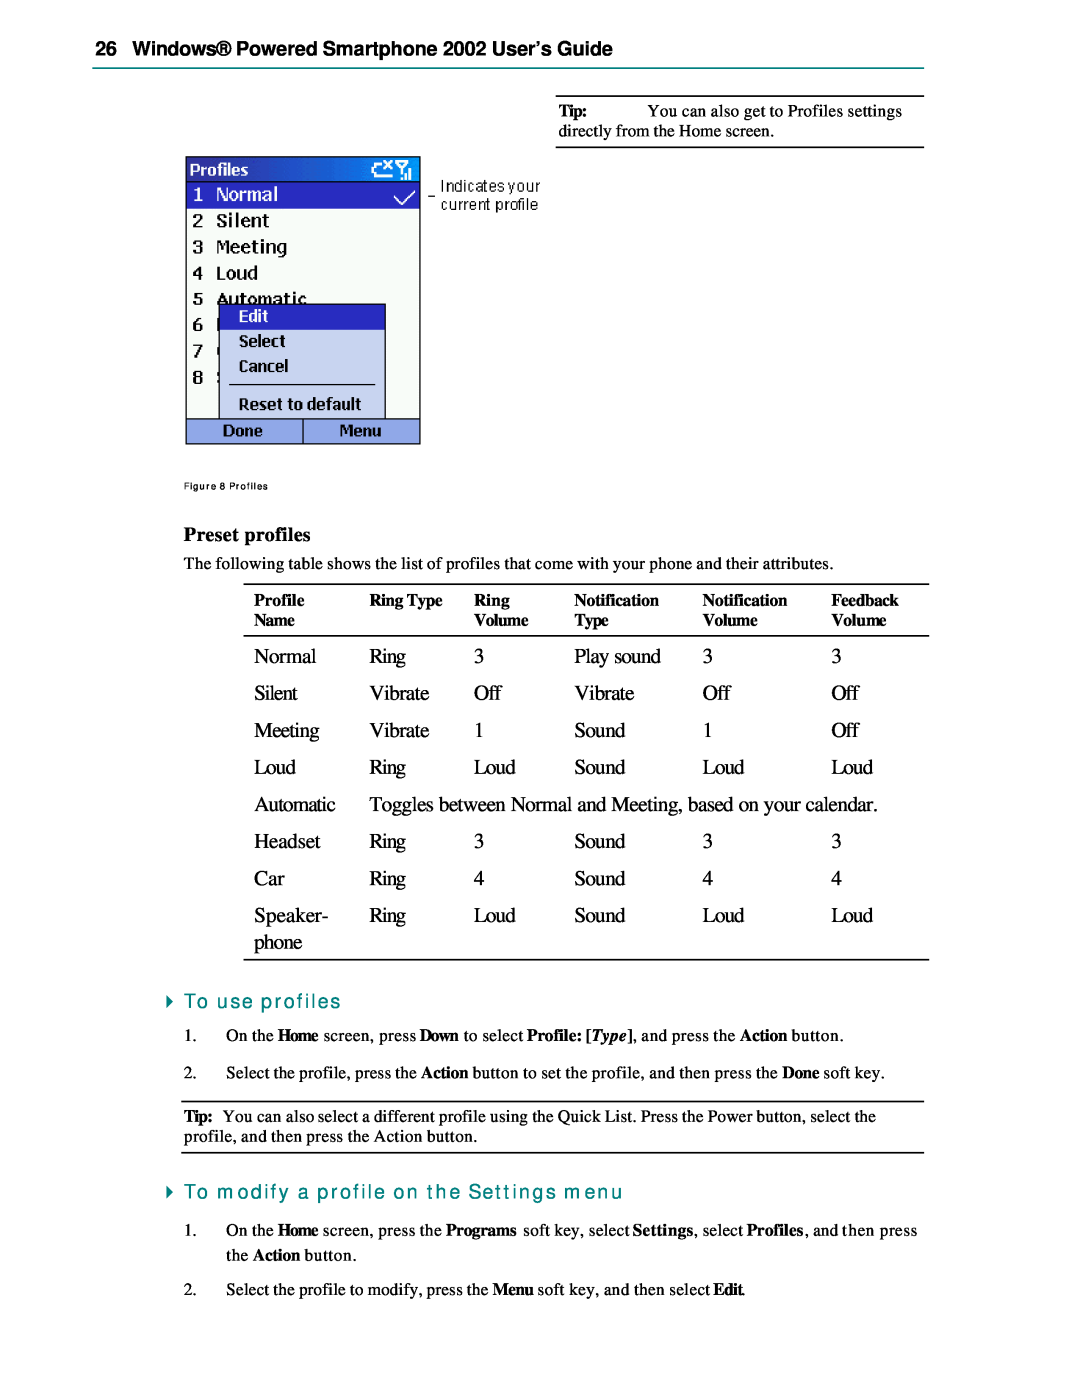 Microsoft manual Windows Powered Smartphone 2002 User’s Guide, Preset profiles 